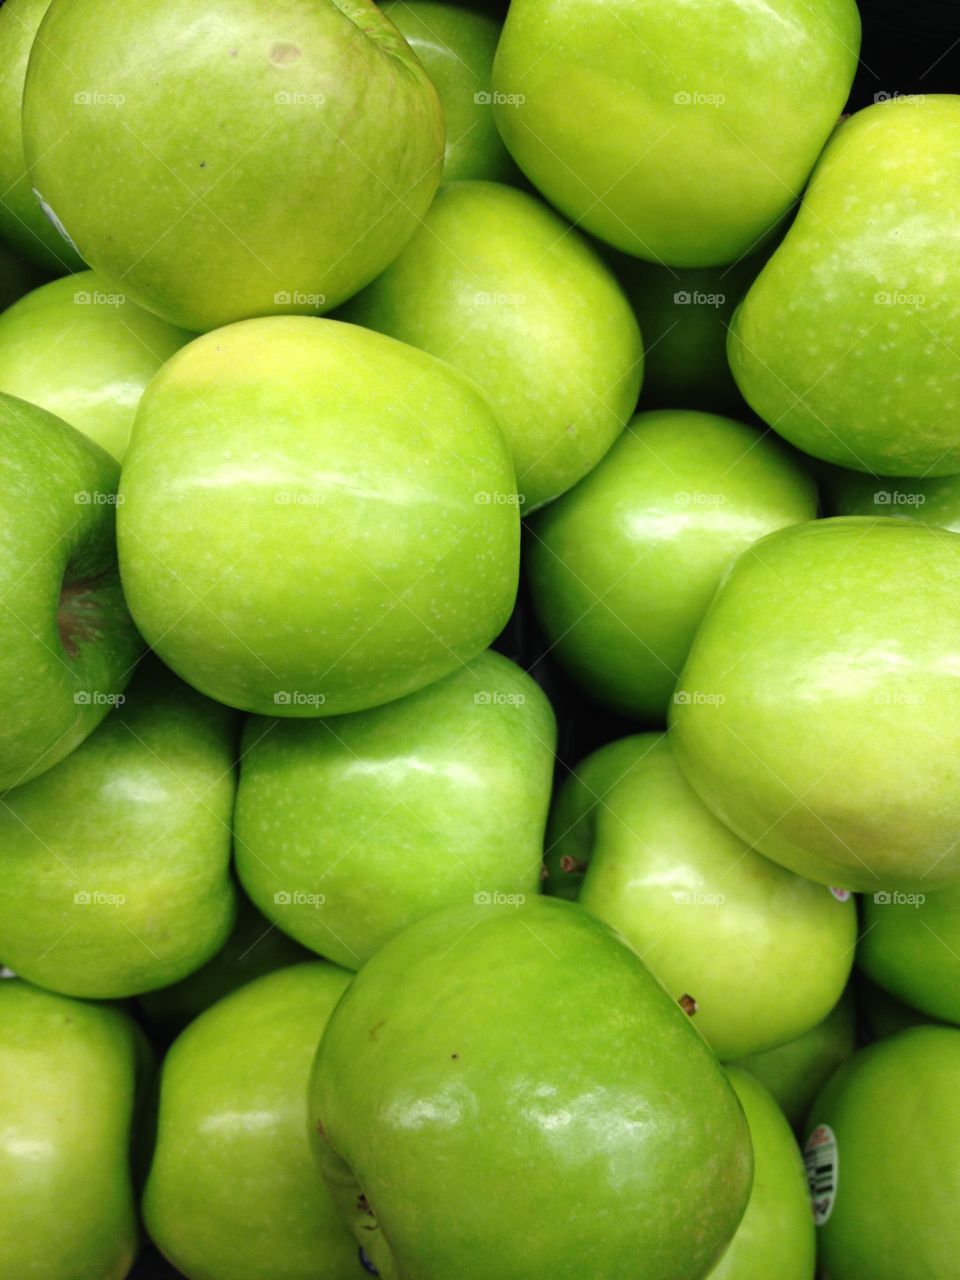 Green apples loose in bin at market.